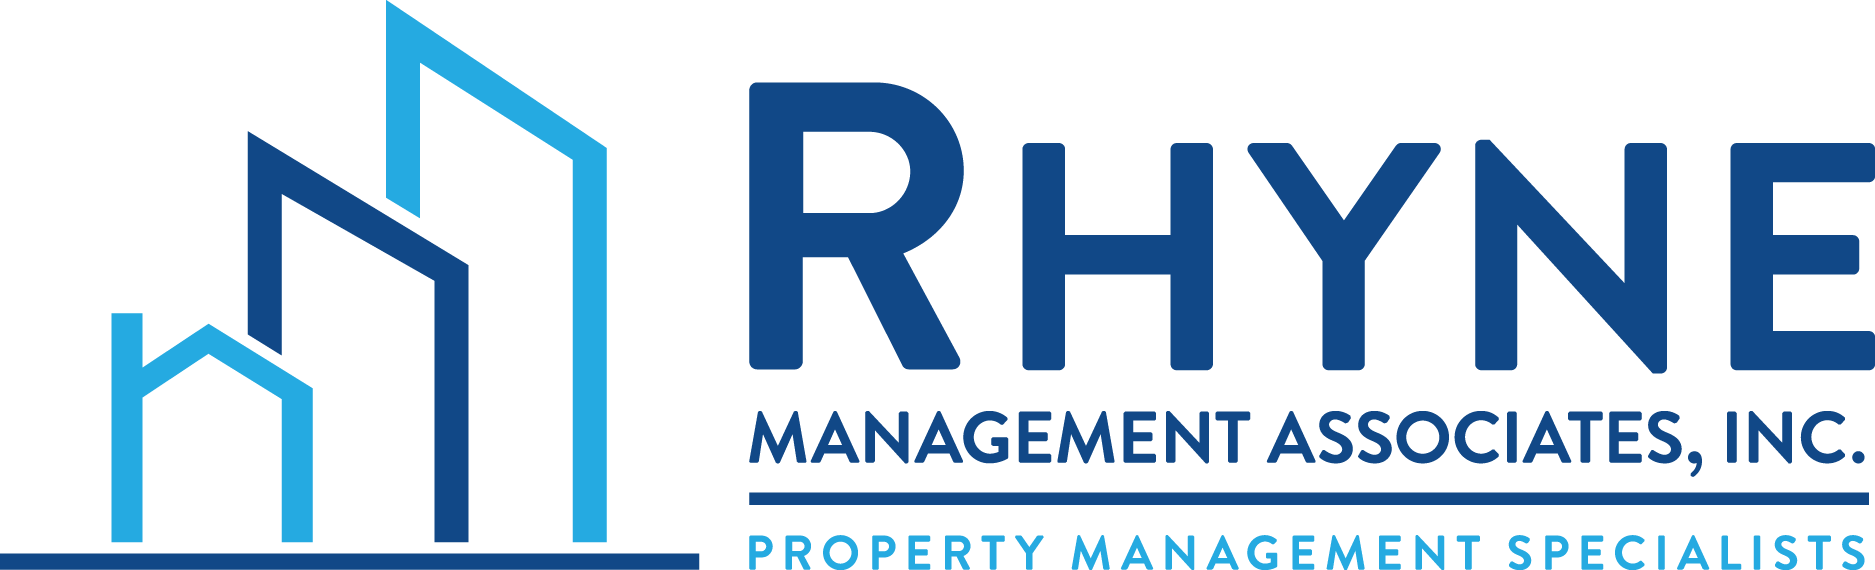 Rhyne Management and associates, inc.